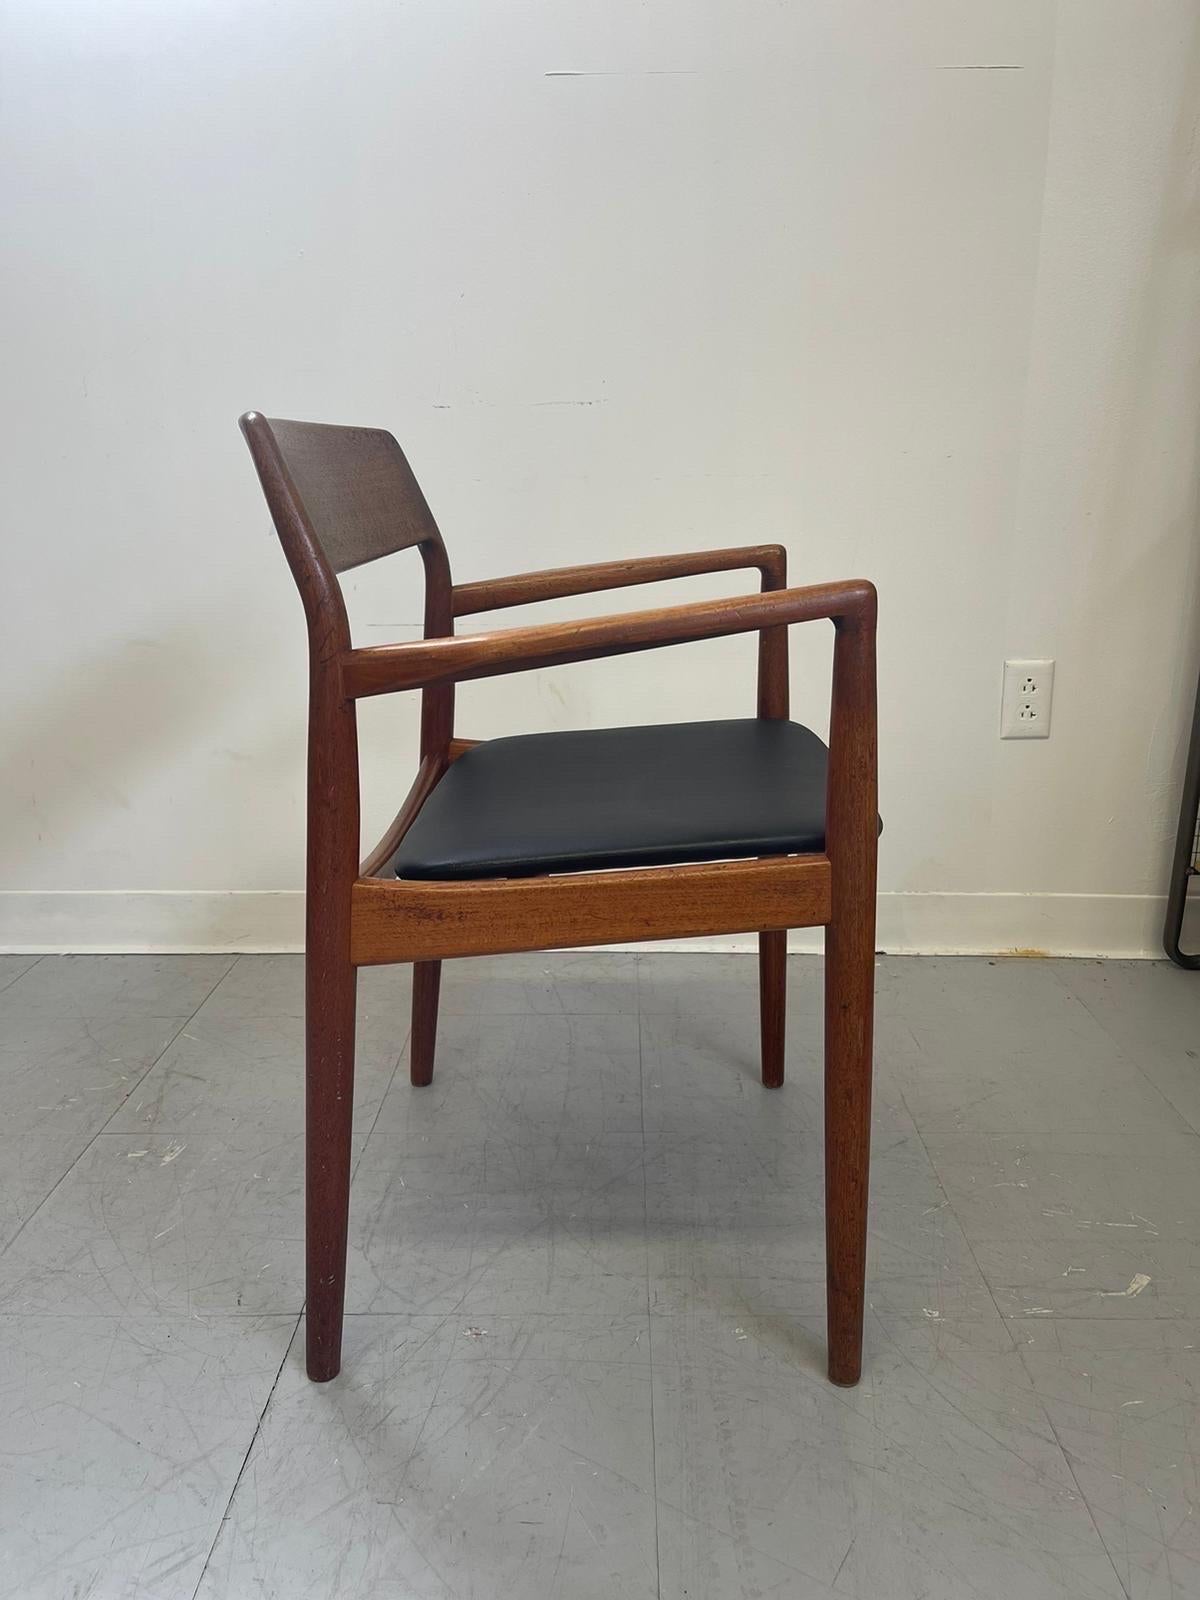 Teak Vintage Danish Modern Dining Chairs by Jl Moller Set of 4. For Sale